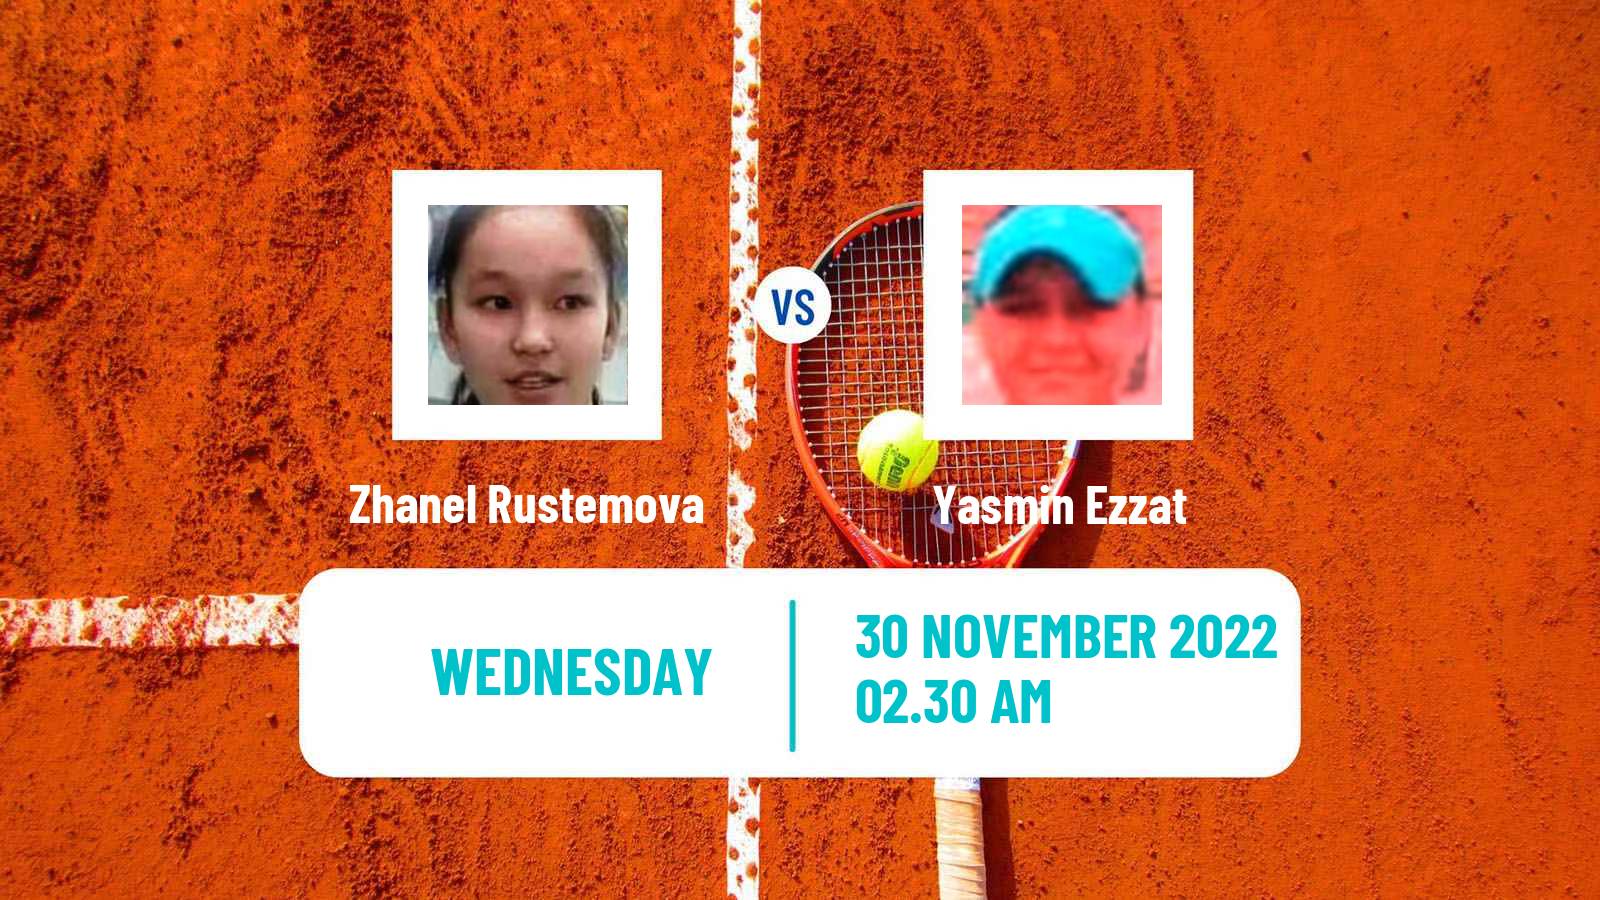 Tennis ITF Tournaments Zhanel Rustemova - Yasmin Ezzat